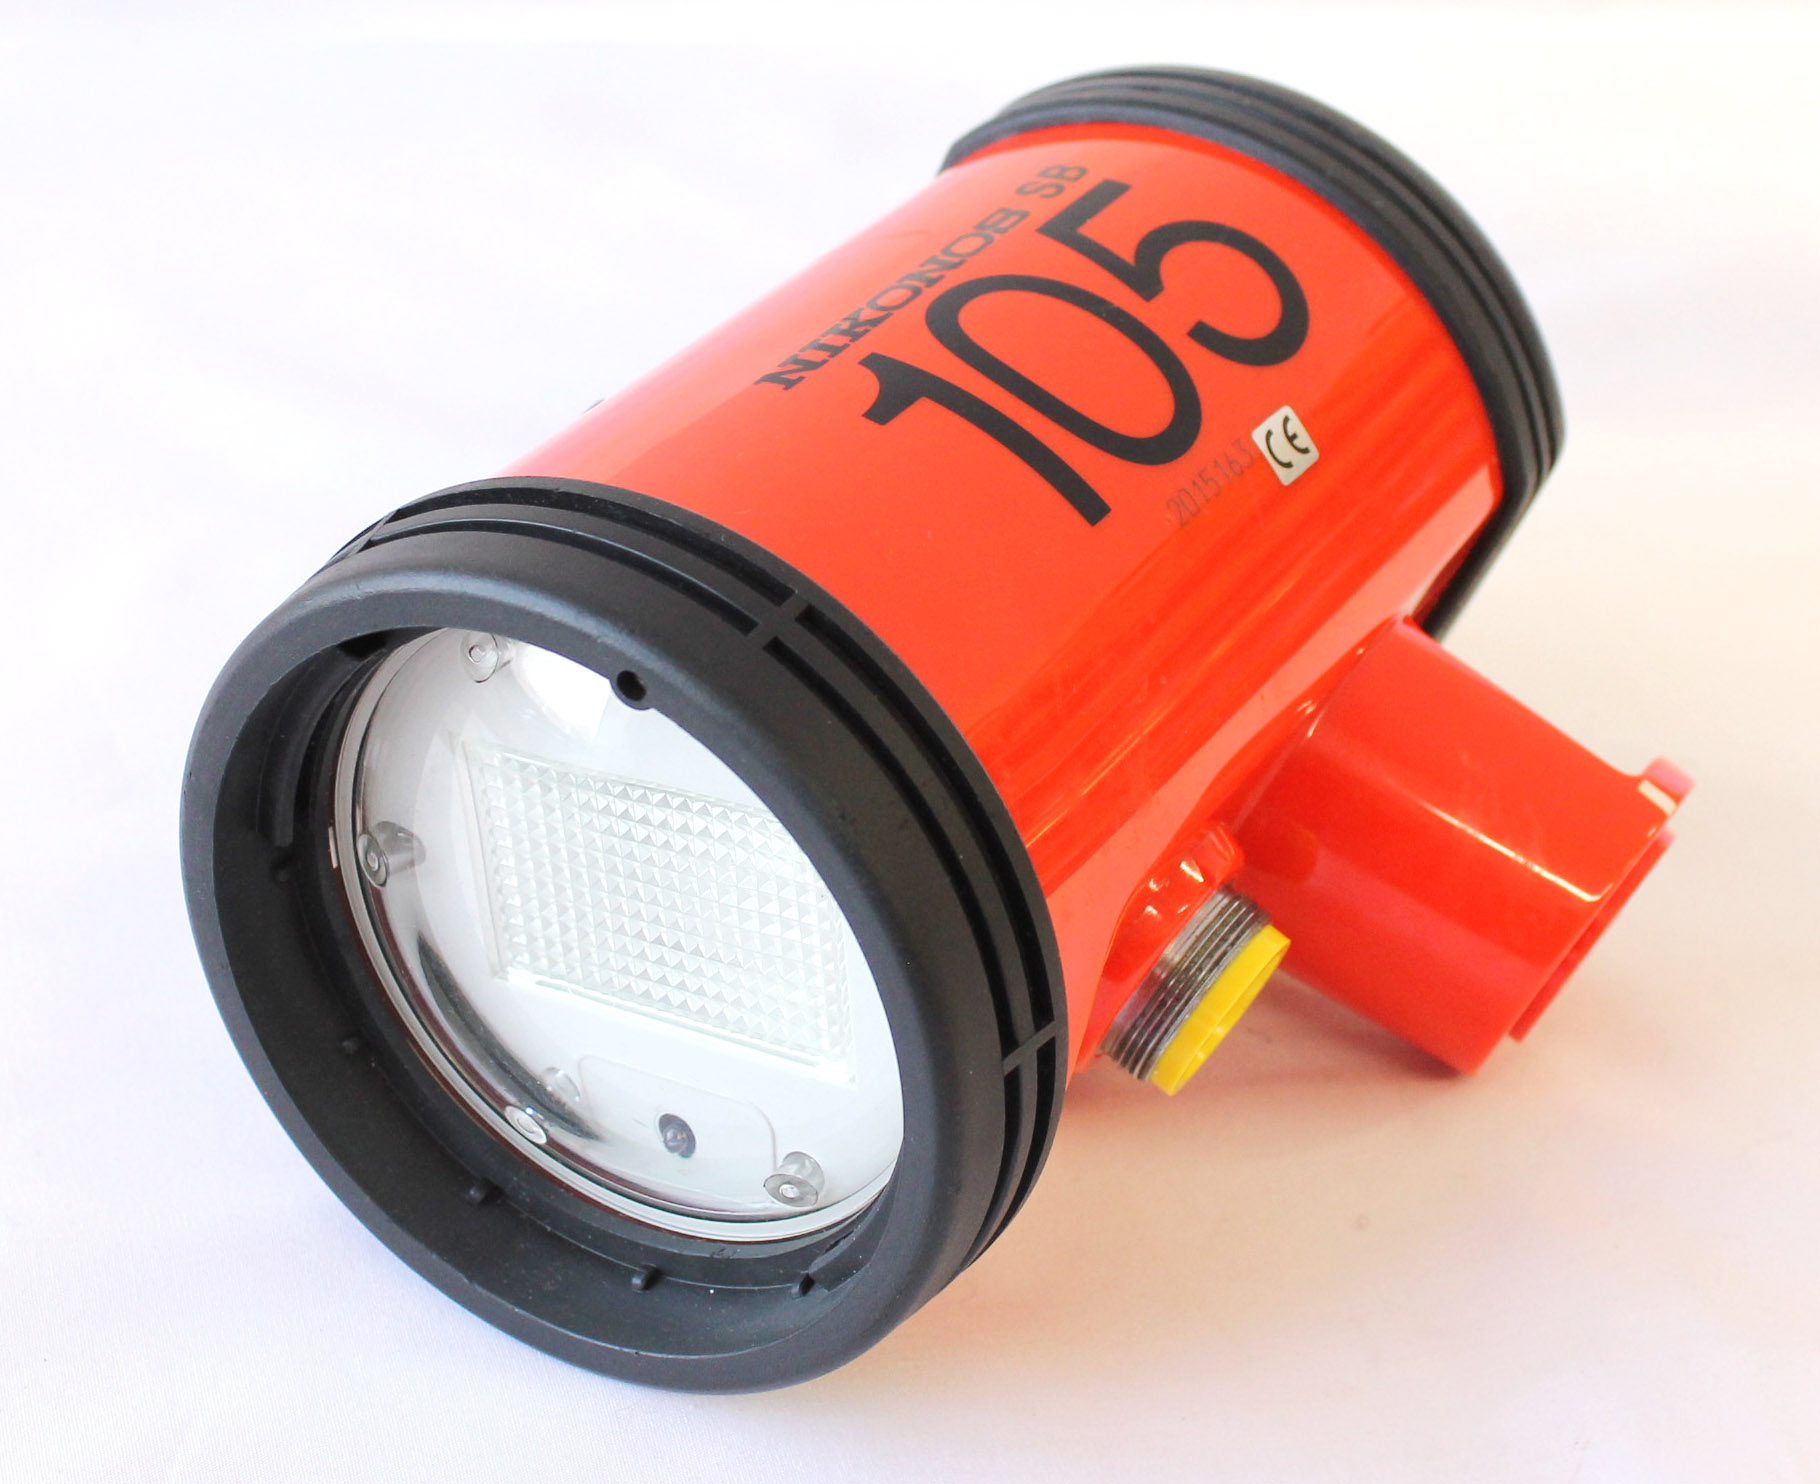  Nikon SB 105 Underwater Speedlight Flash for Nikonos w/ Sync Cord from Japan Photo 1